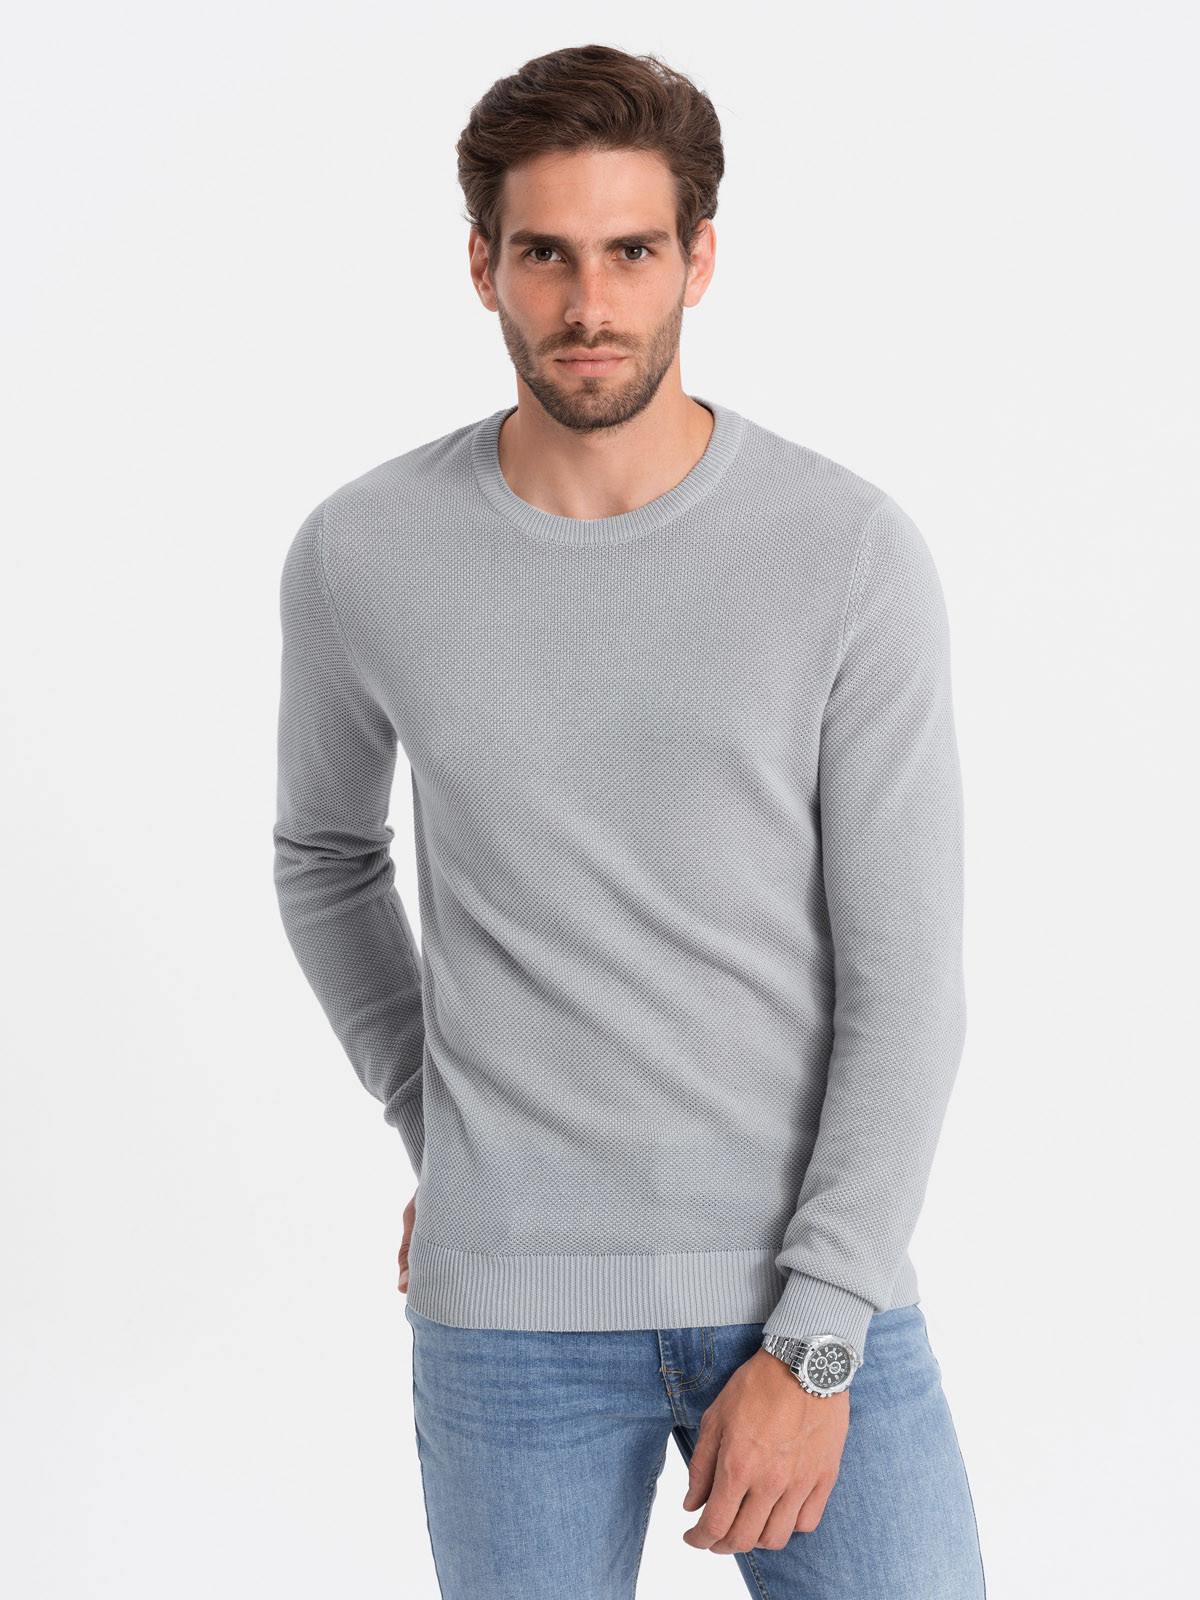 Men's textured sweater with half round neckline - light grey V5 OM-SWSW V5 OM-SWSW - 0104